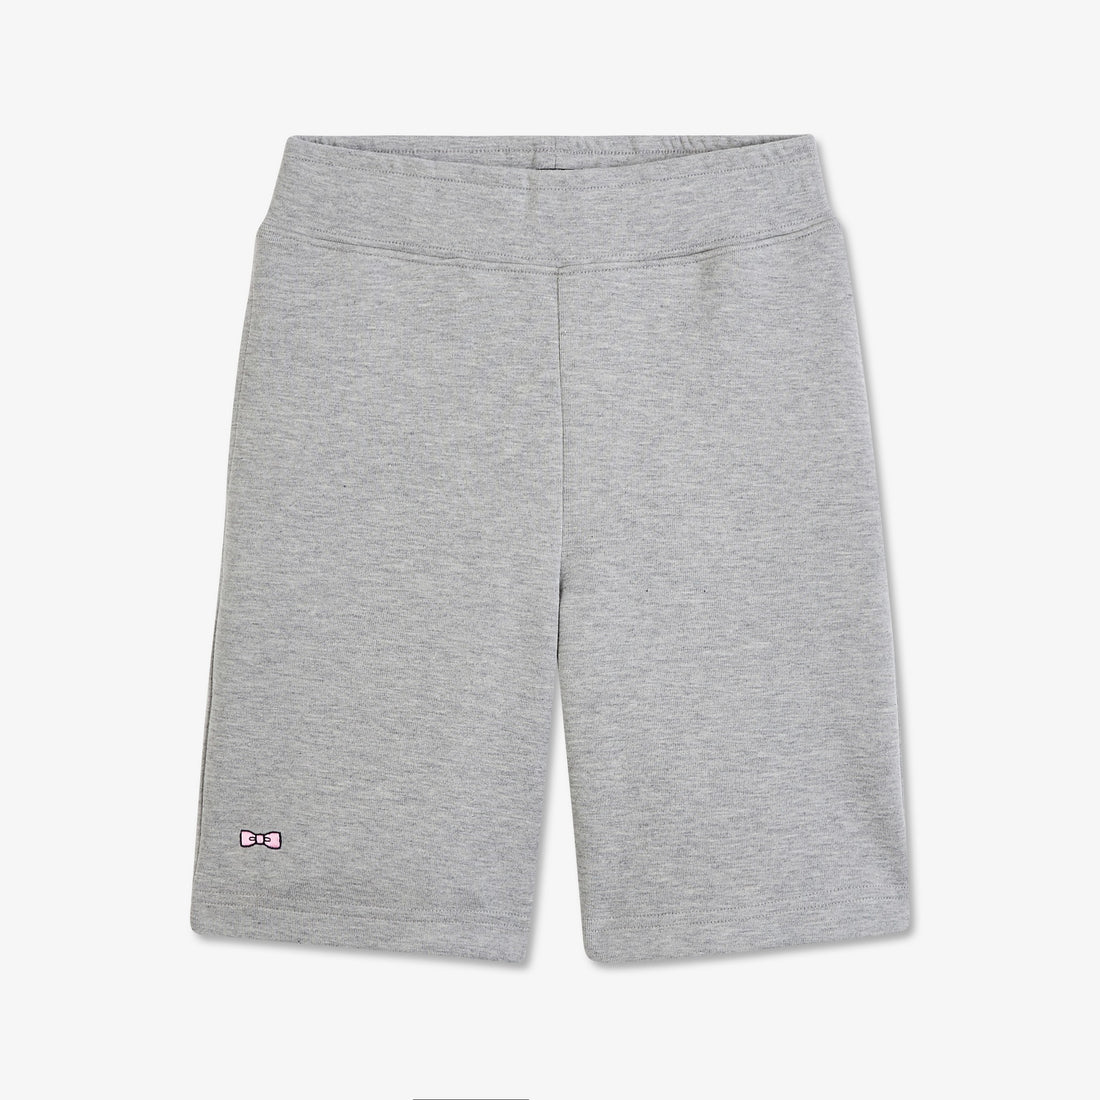 Grey Fleece Shorts - 01